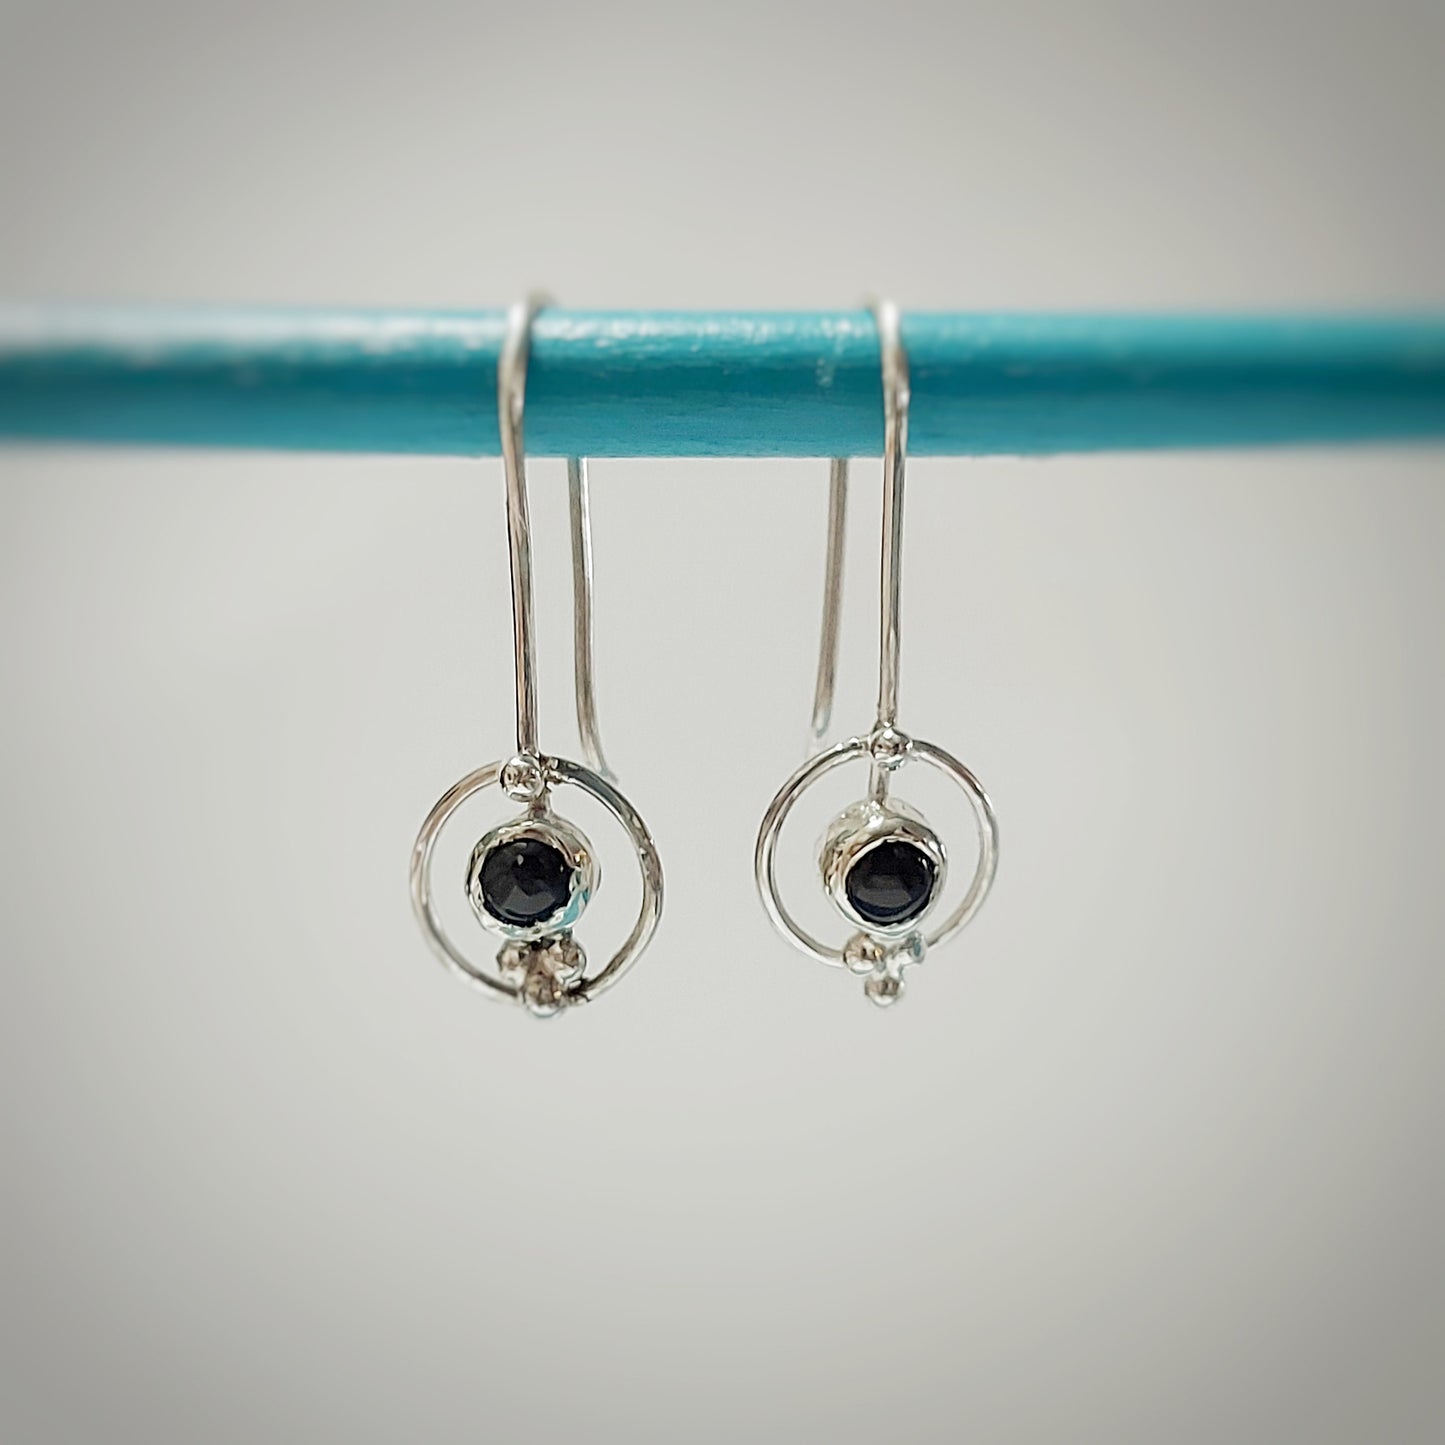 Circle dangle earrings